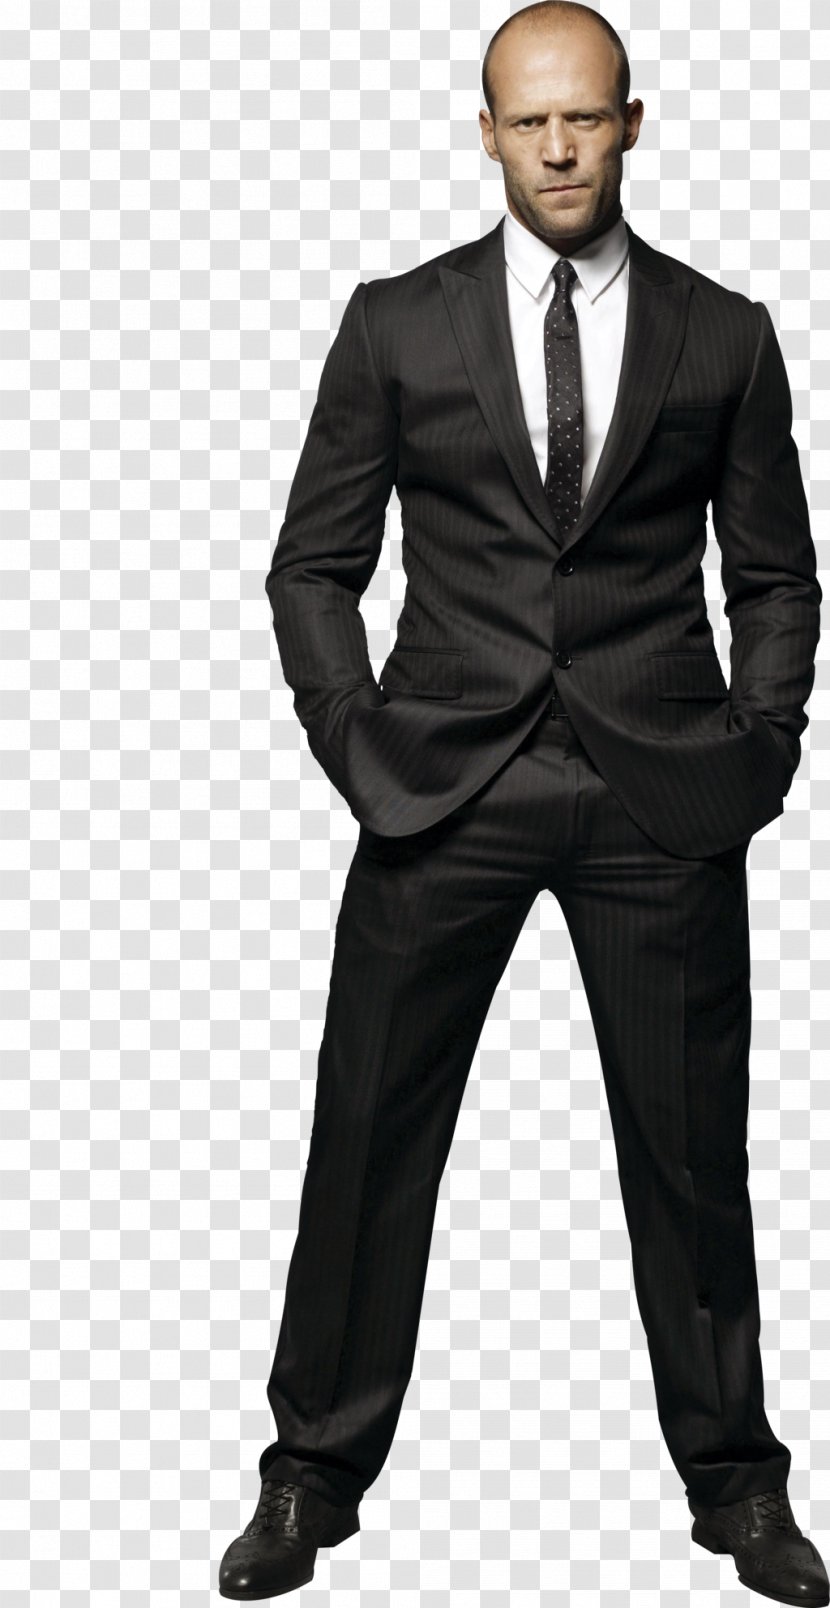 Jason Statham The Transporter Film Series Suit Actor - Professional Transparent PNG